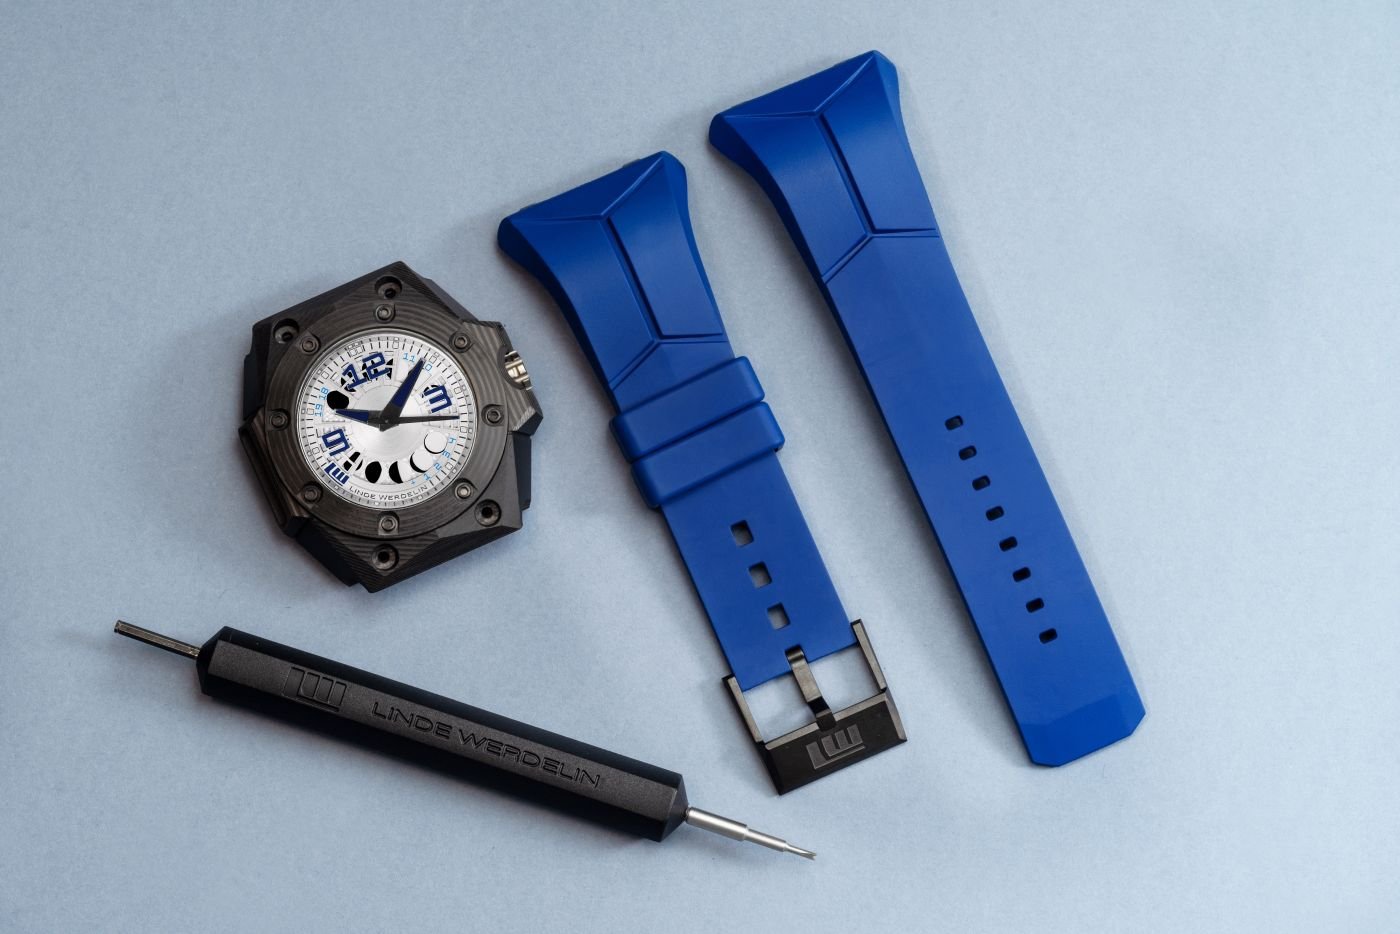 Linde Werdelin presents new versions of its Oktopus timepiece